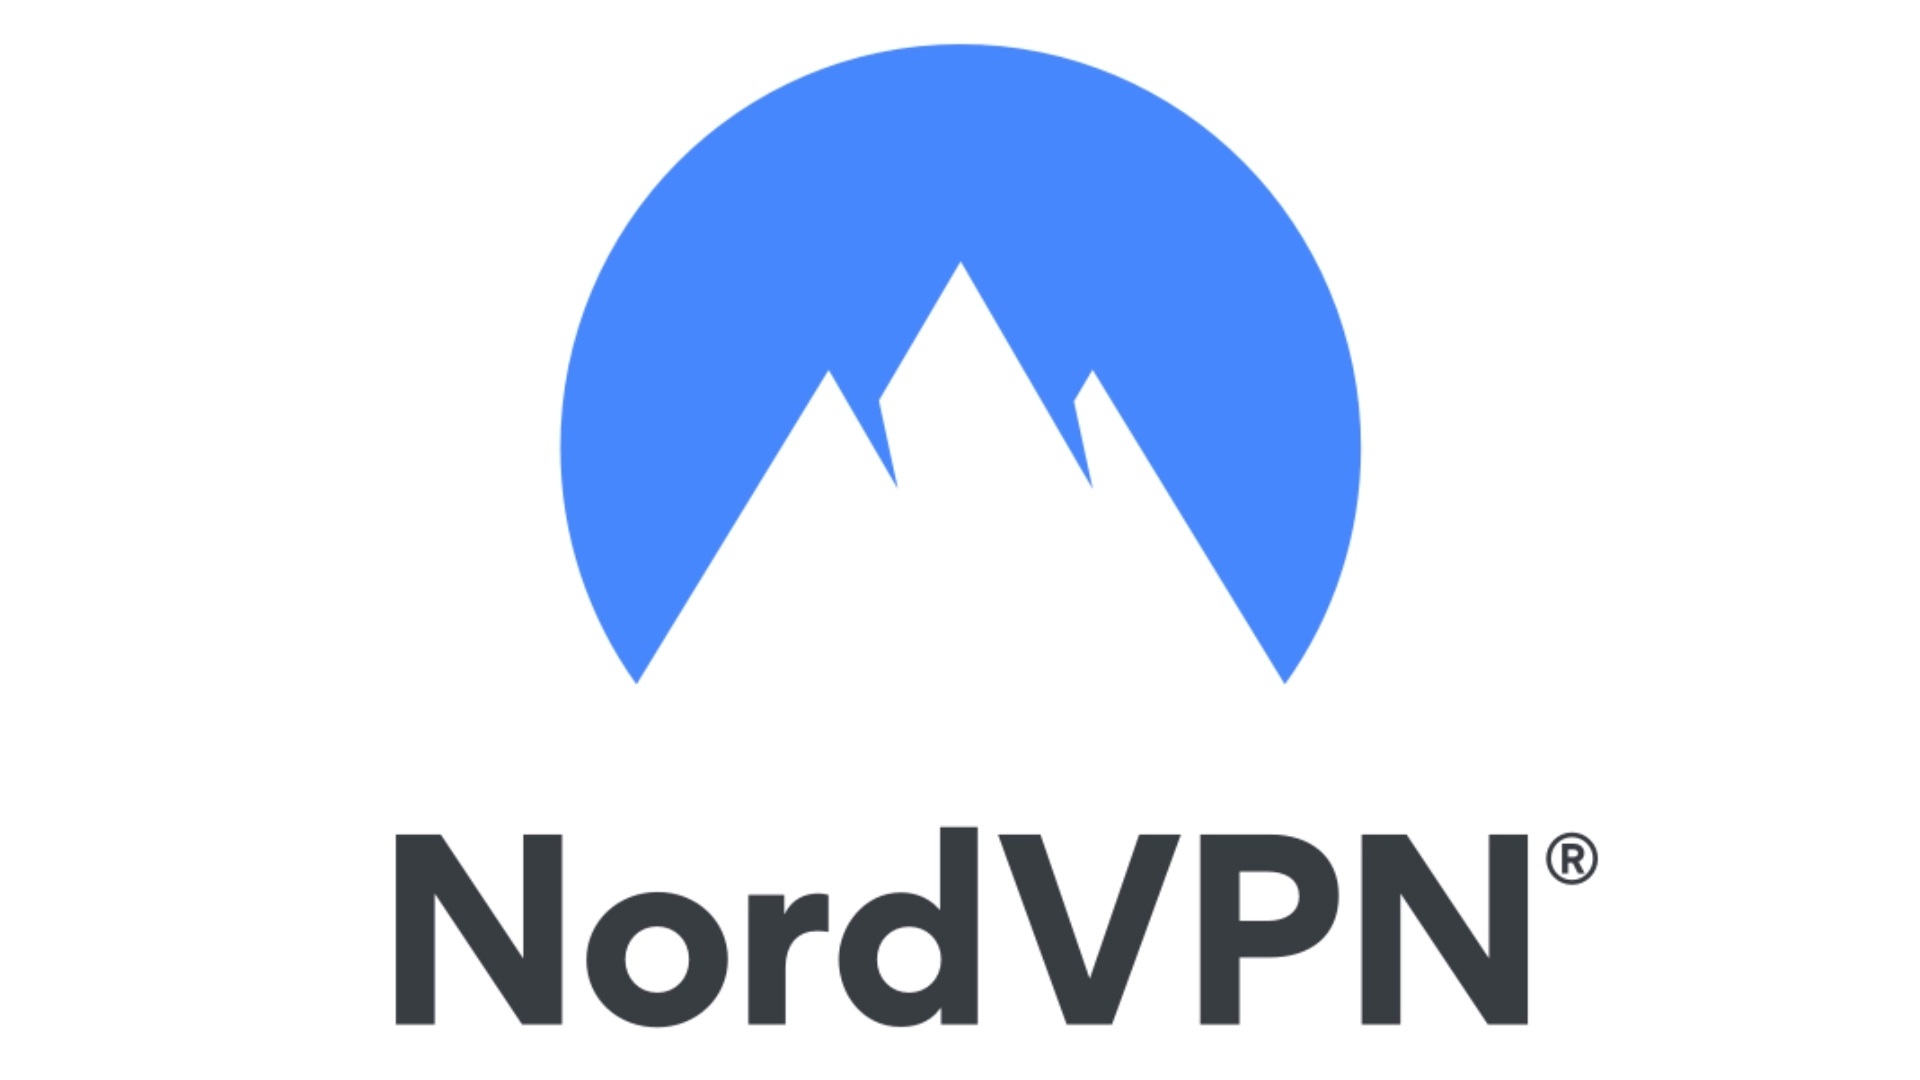 Best GTA Online VPN: NordVPN. Image shows the company logo.